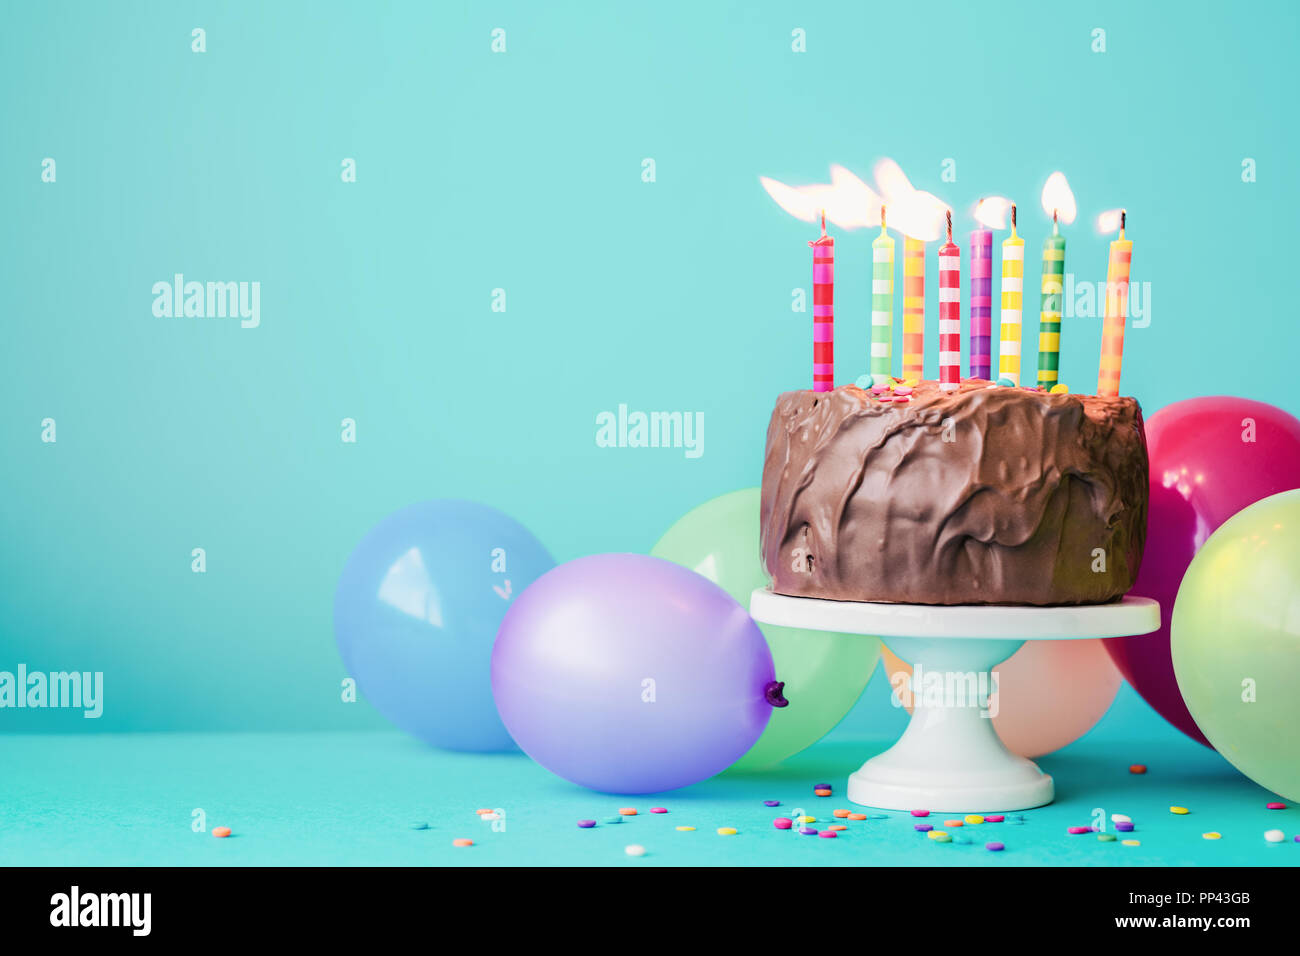 Schokolade Kuchen mit bunten Kerzen und Ballons Stockfoto